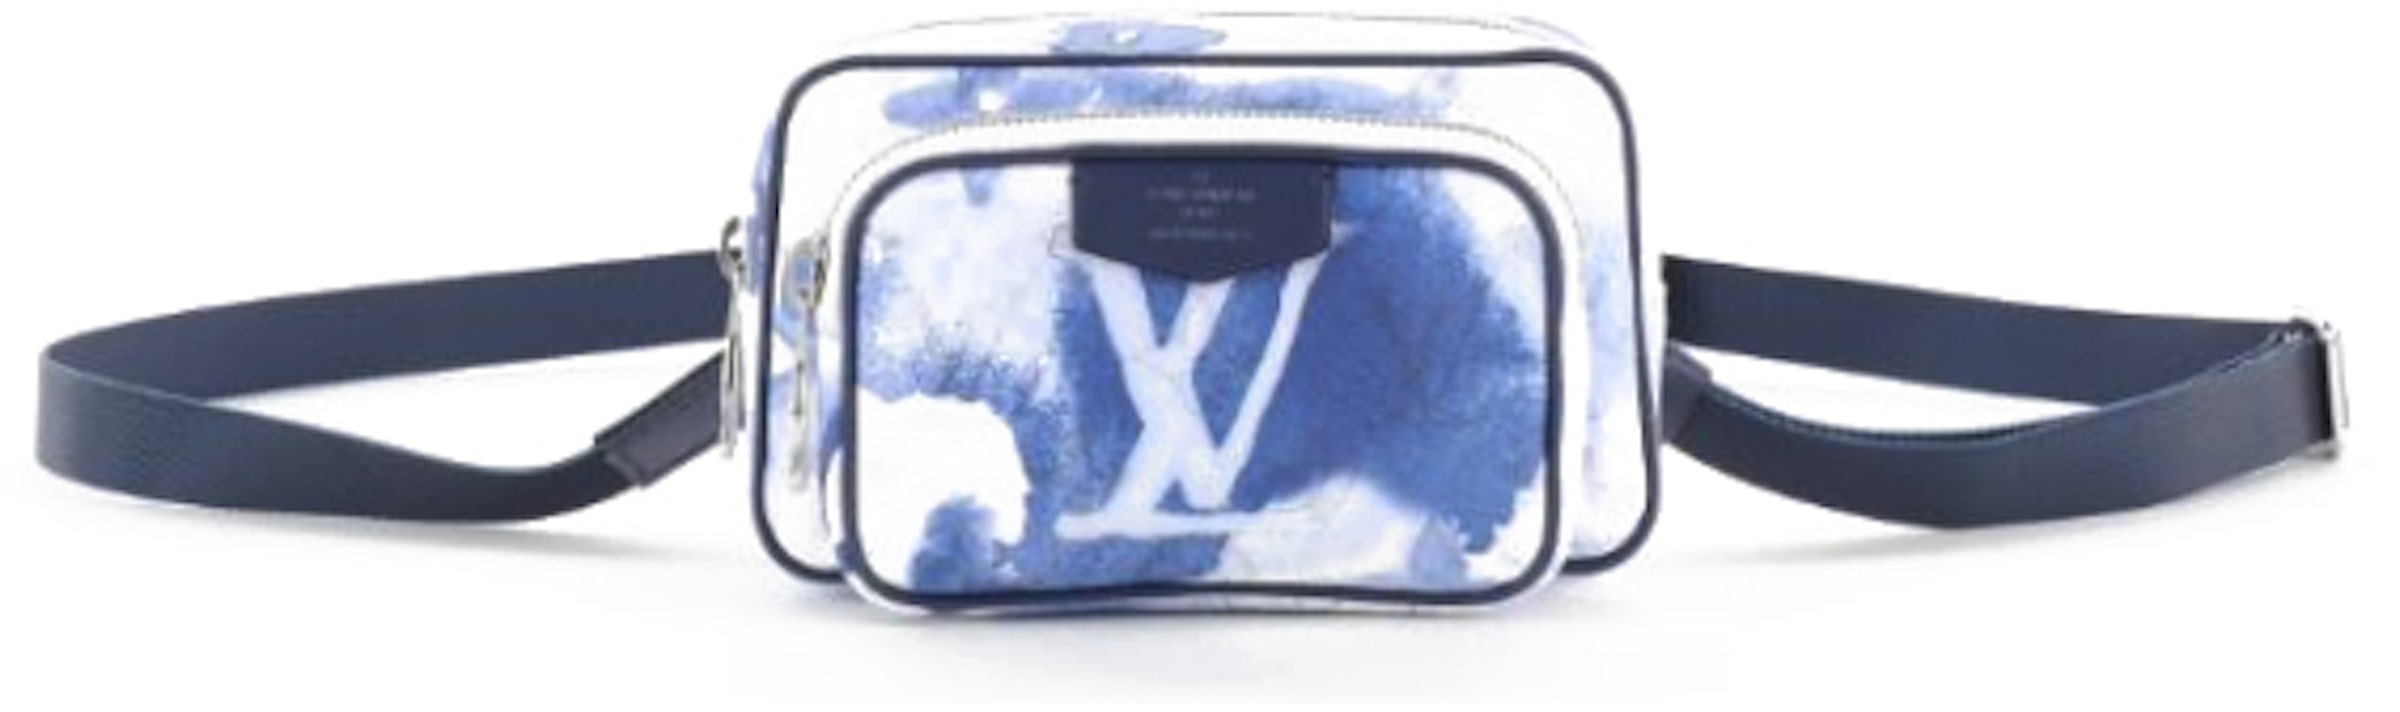 Authenticated Louis Vuitton Monogram Pacific Outdoor Pouch Blue